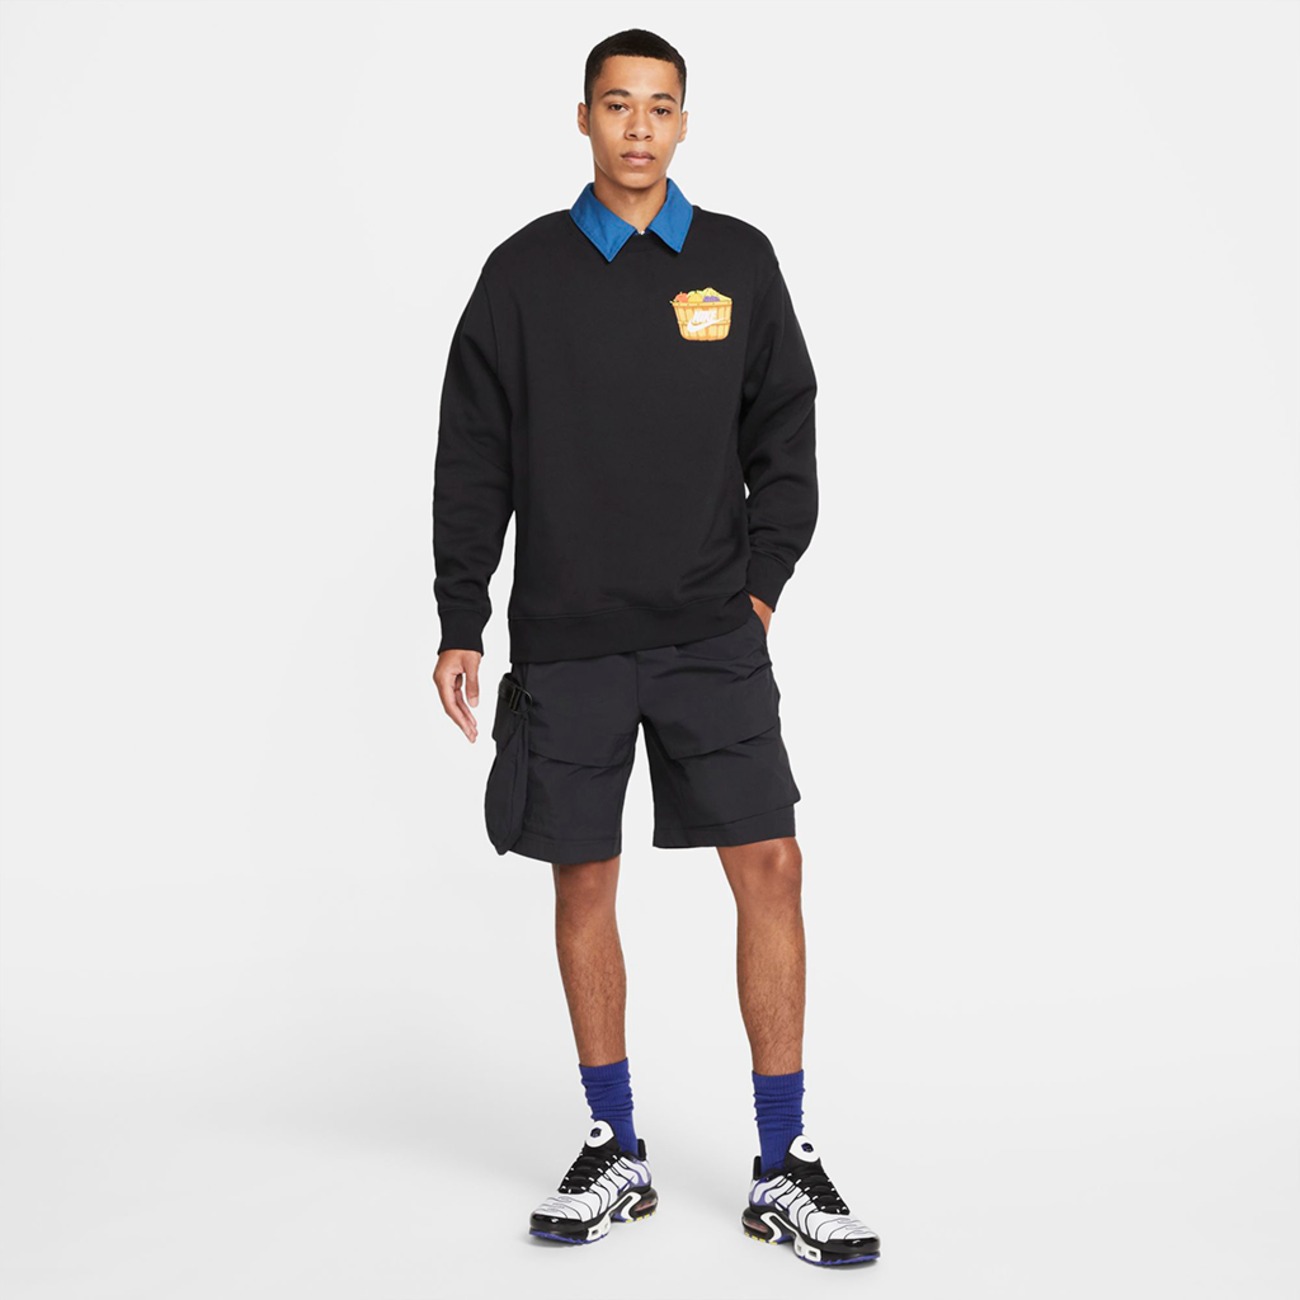 Blusão Nike Sportswear Masculino - Foto 4